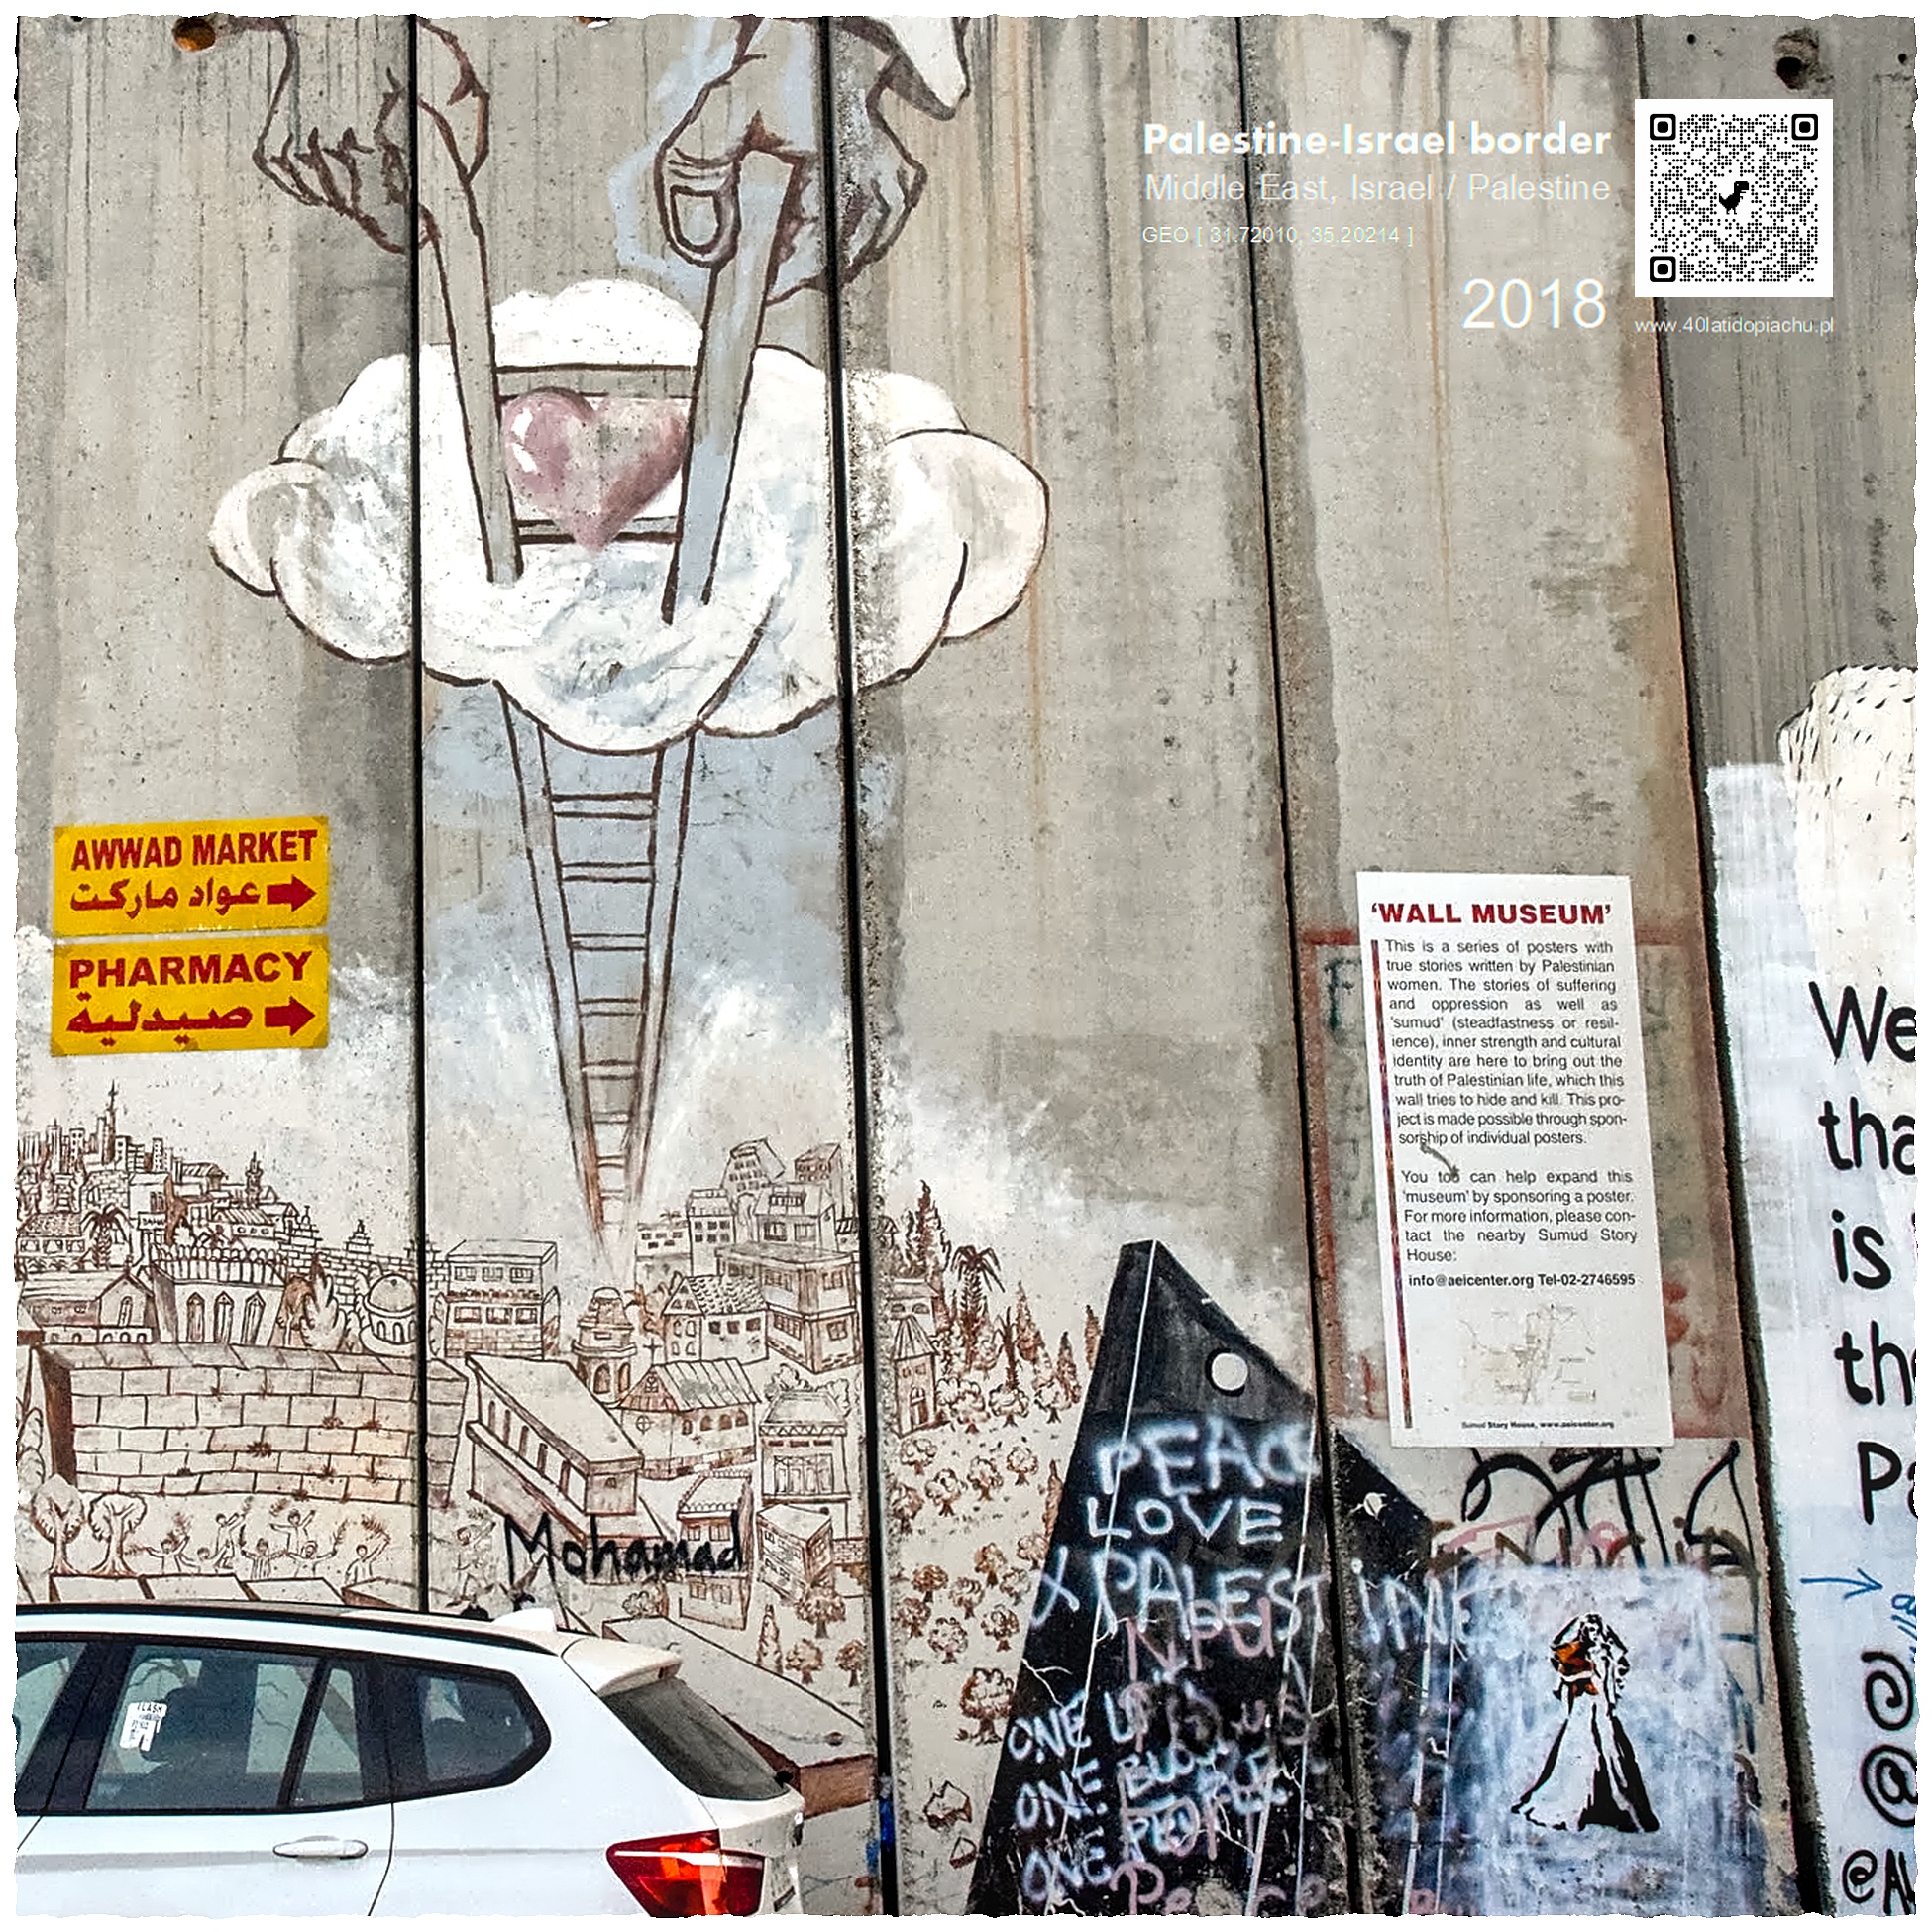 Palestyna mur z Izraelem graffiti